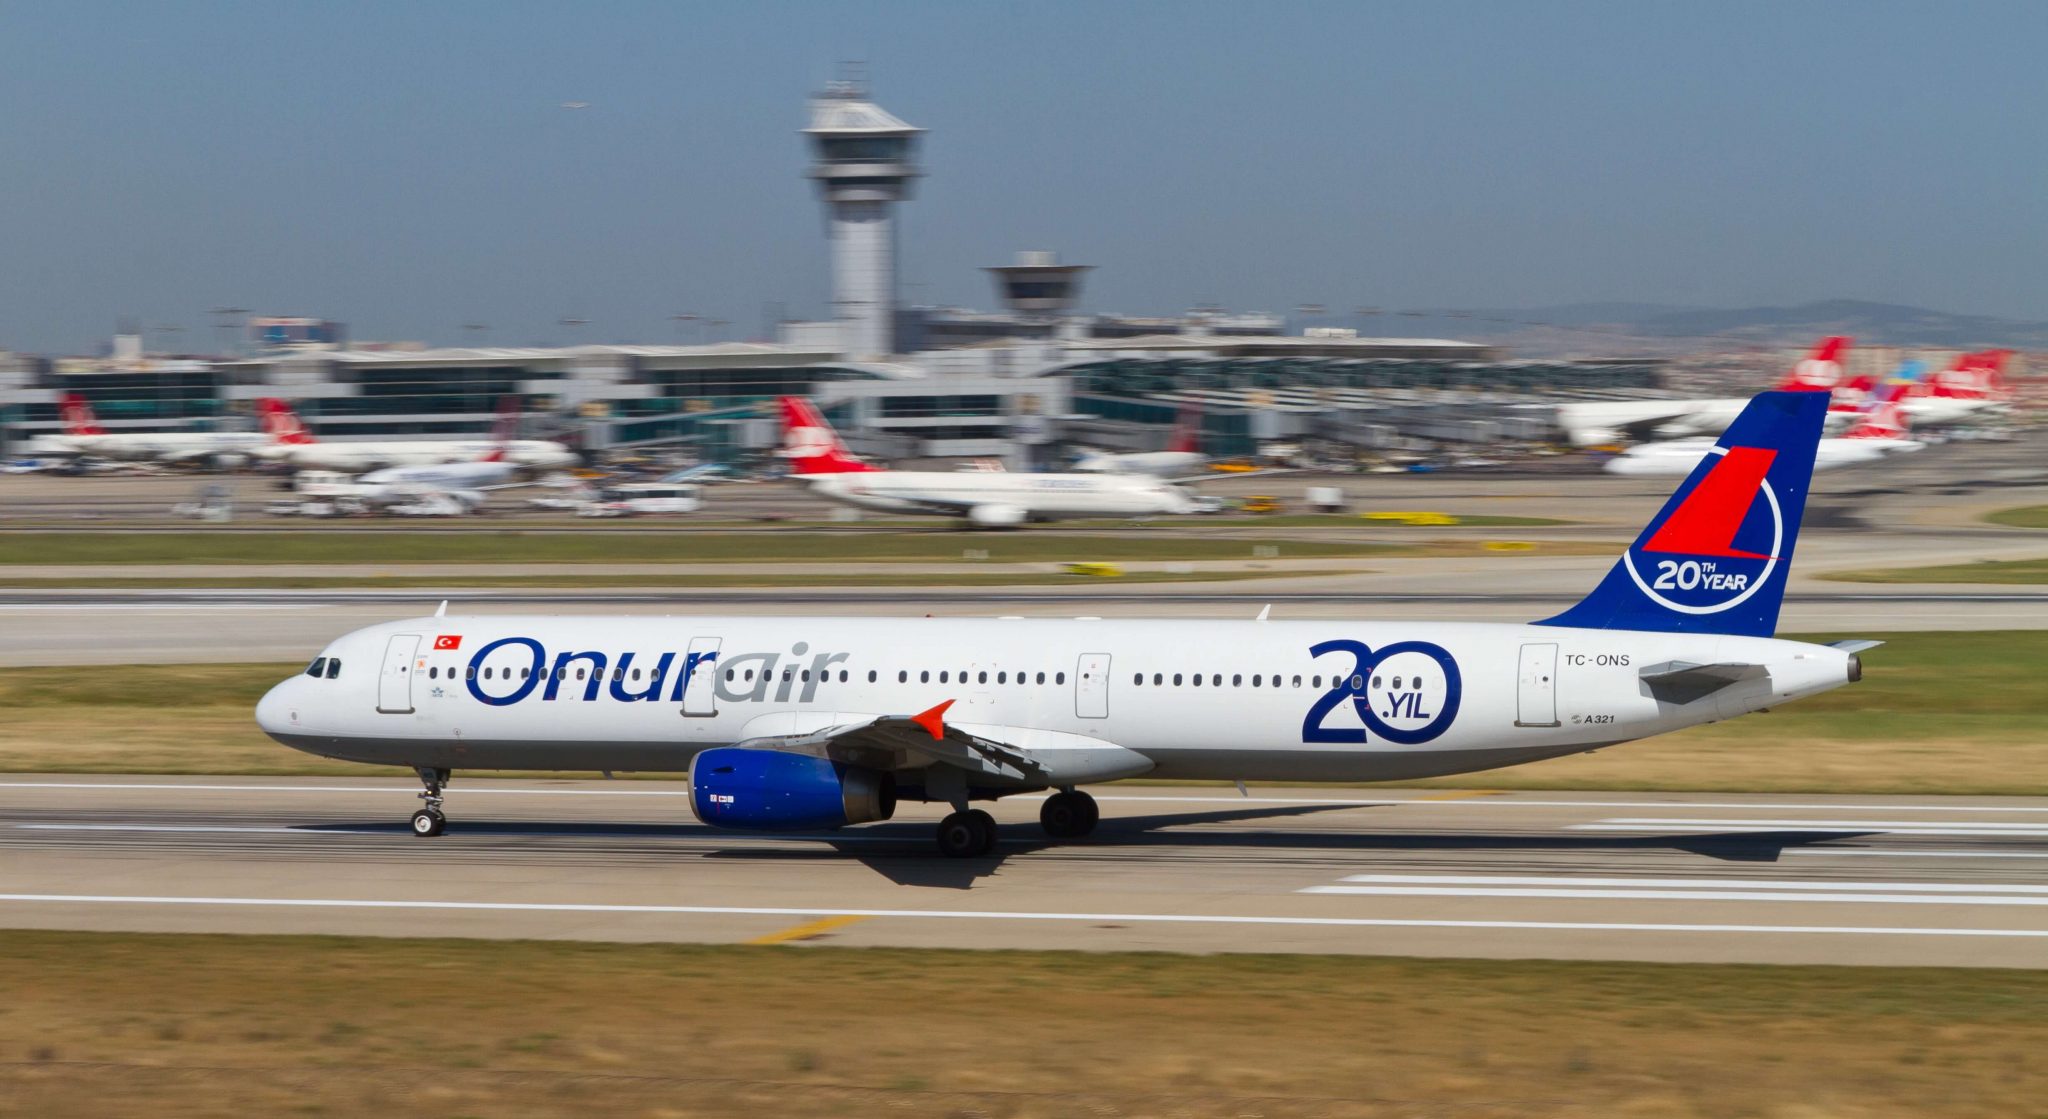 Vallair leases three Airbus A321s to Onur Air in Turkey